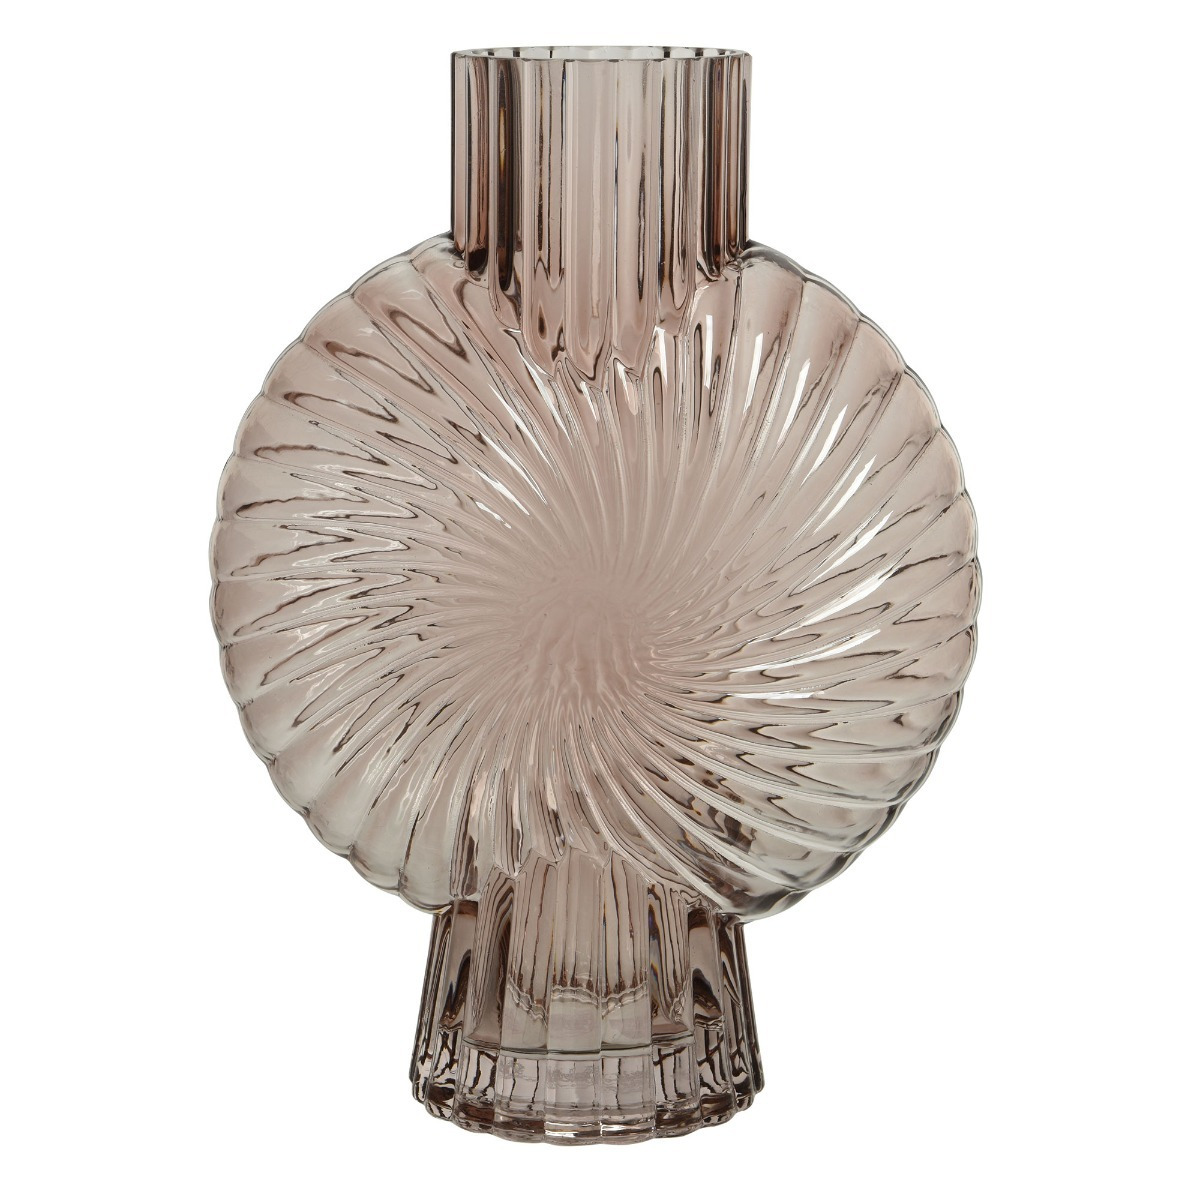 Swirl Glass Vase, Brown - Barker & Stonehouse - image 1